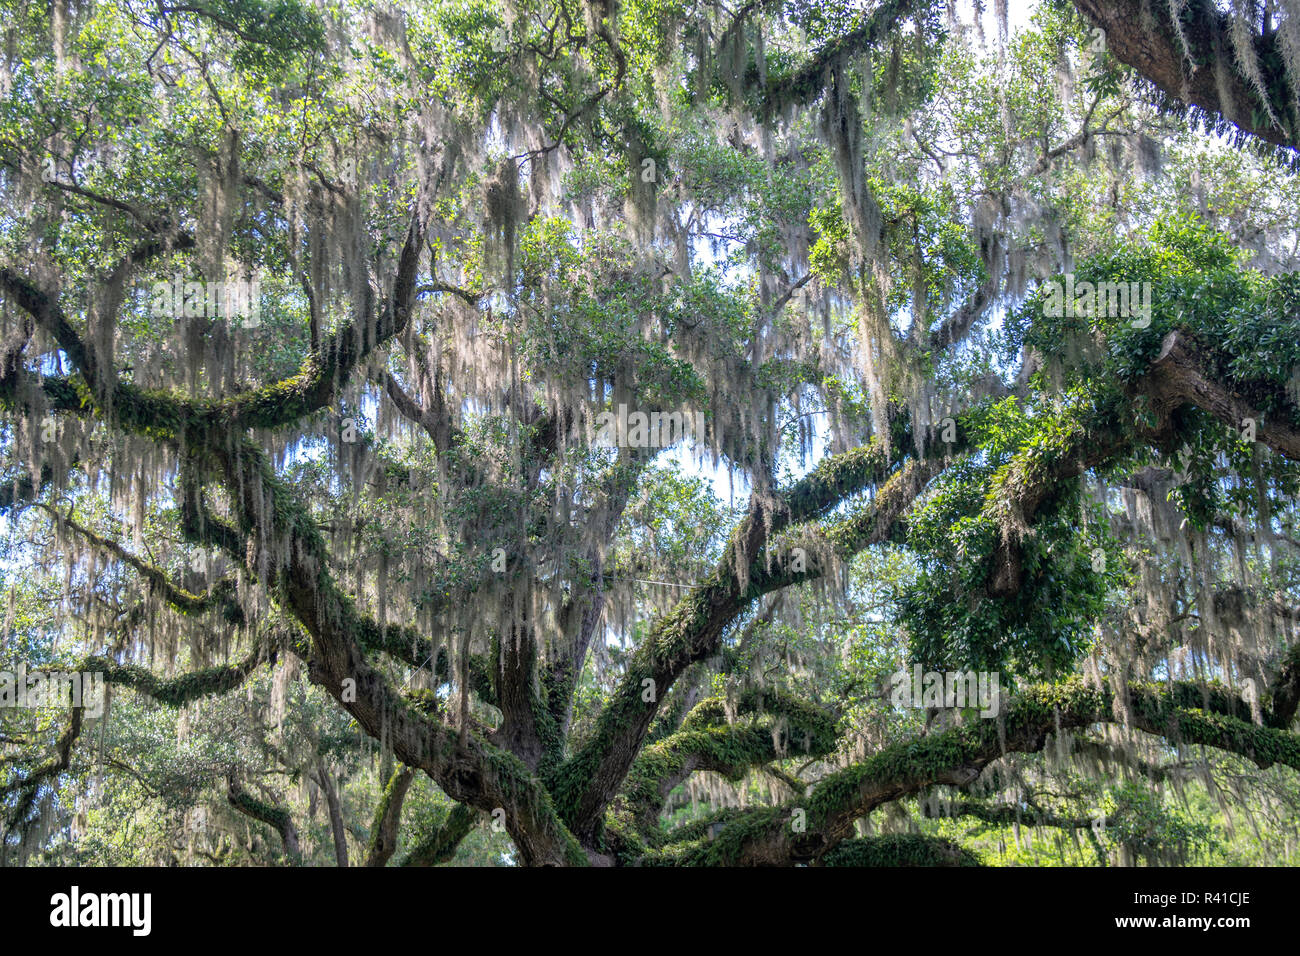 Live Oak Tree, Murrells Inlet, South Carolina, USA Stockfoto